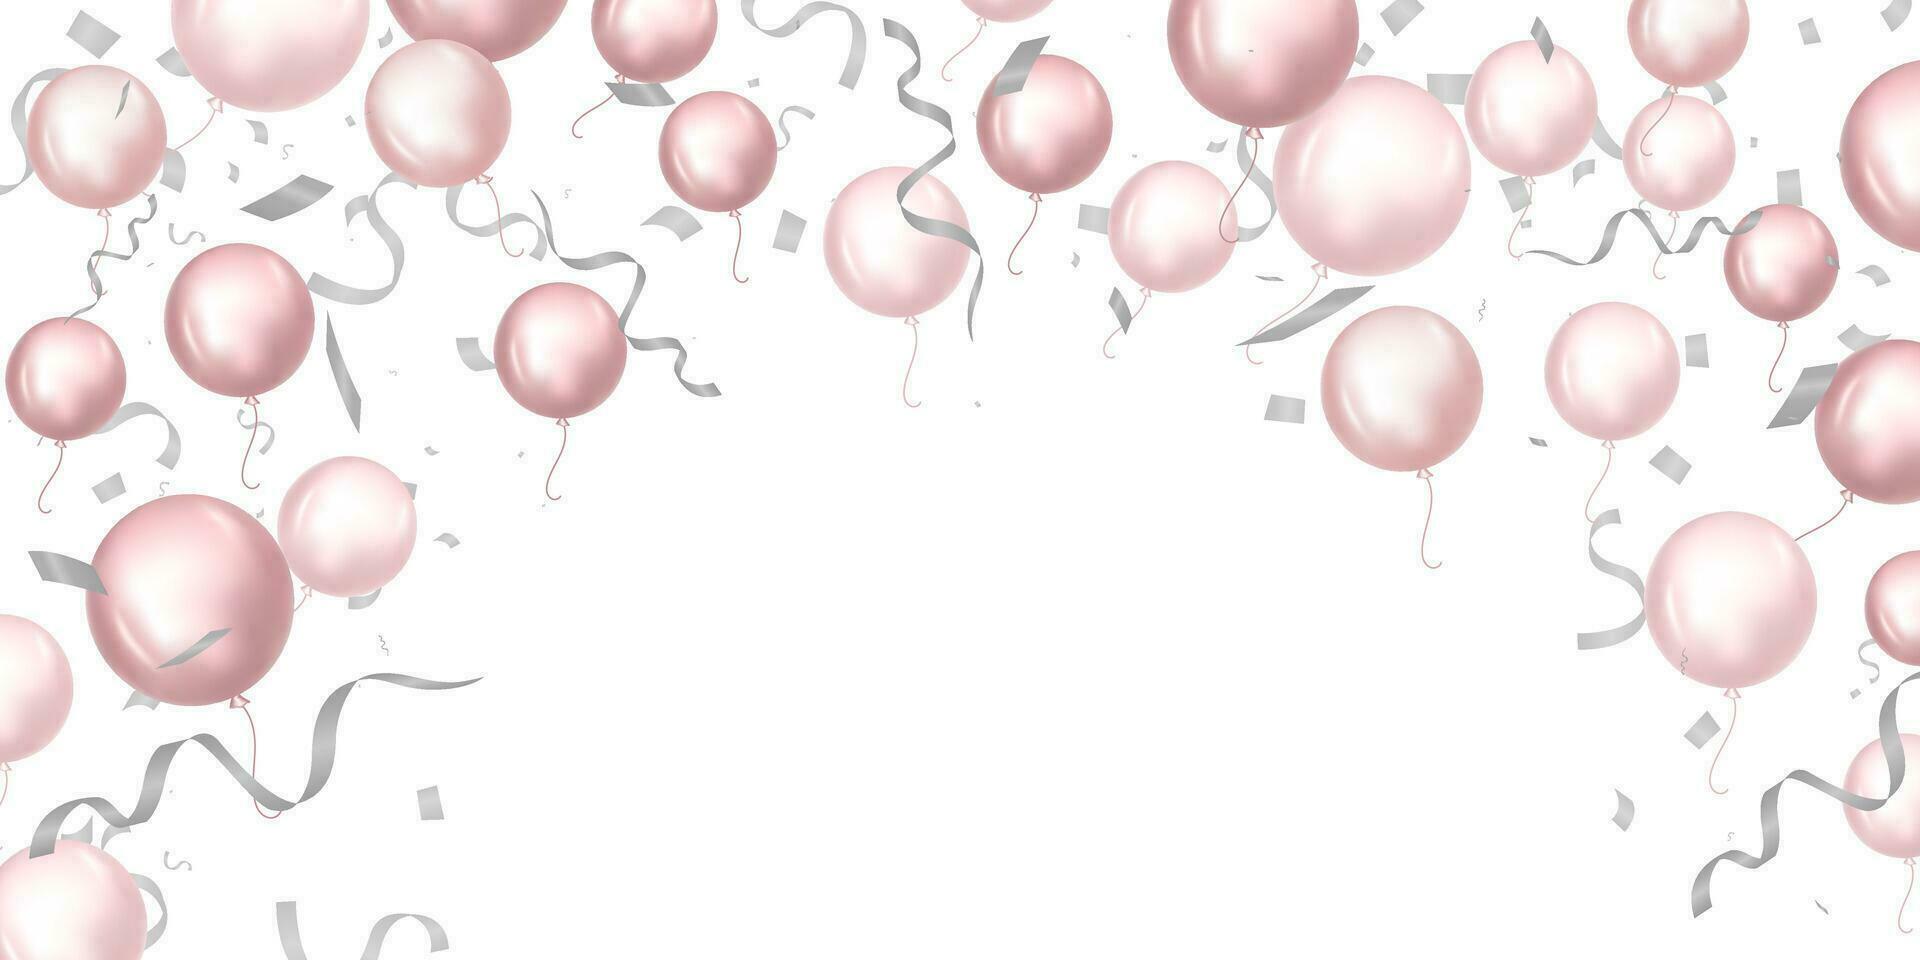 roze ballonnen en confetti achtergrond. vector illustratie